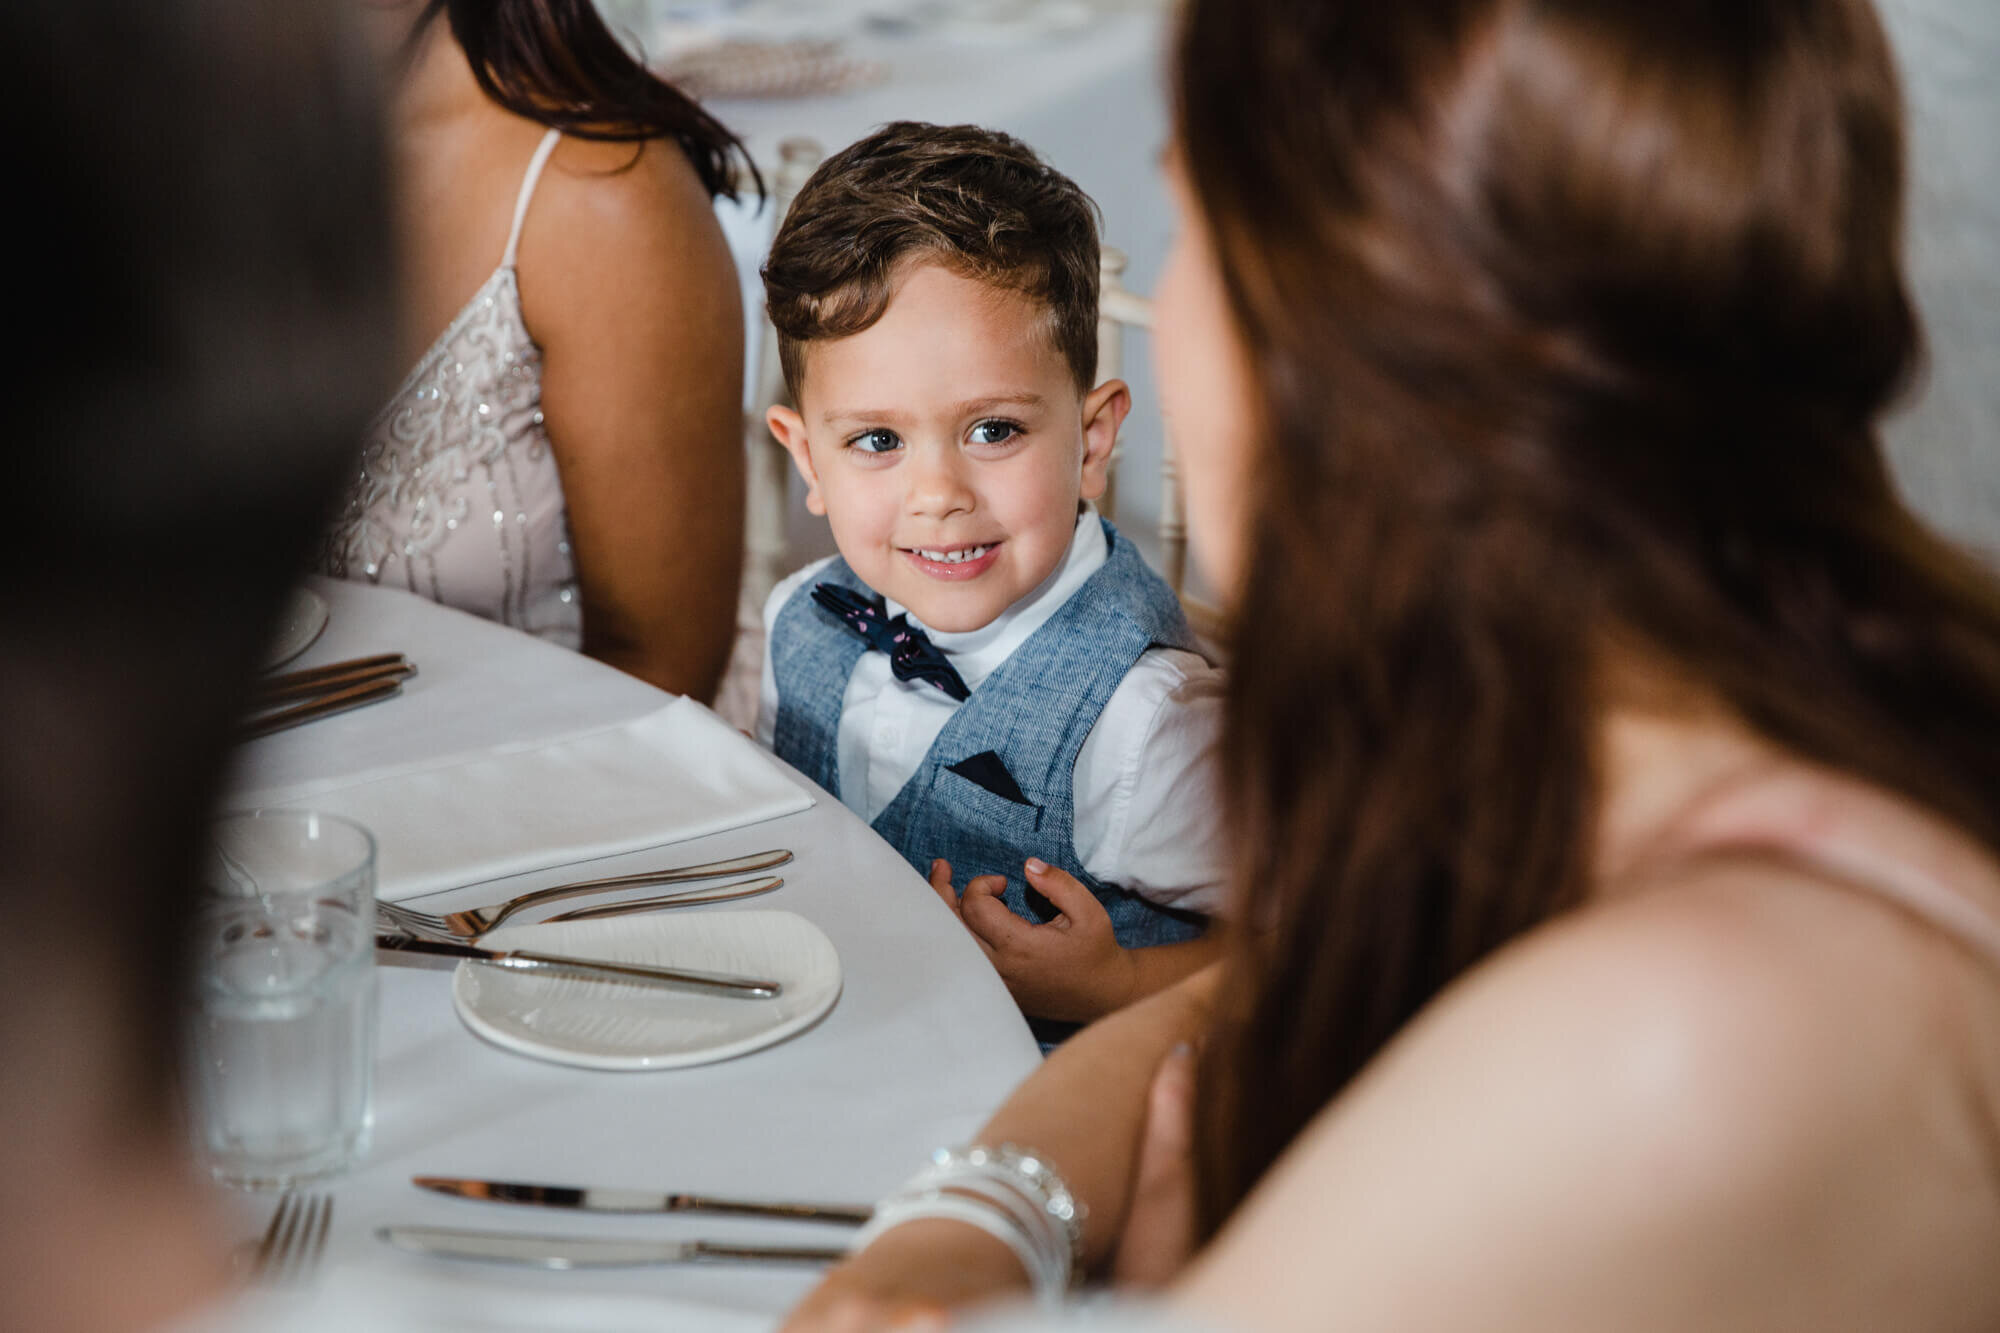 pageboy smiling at mum at wedding breakfast table